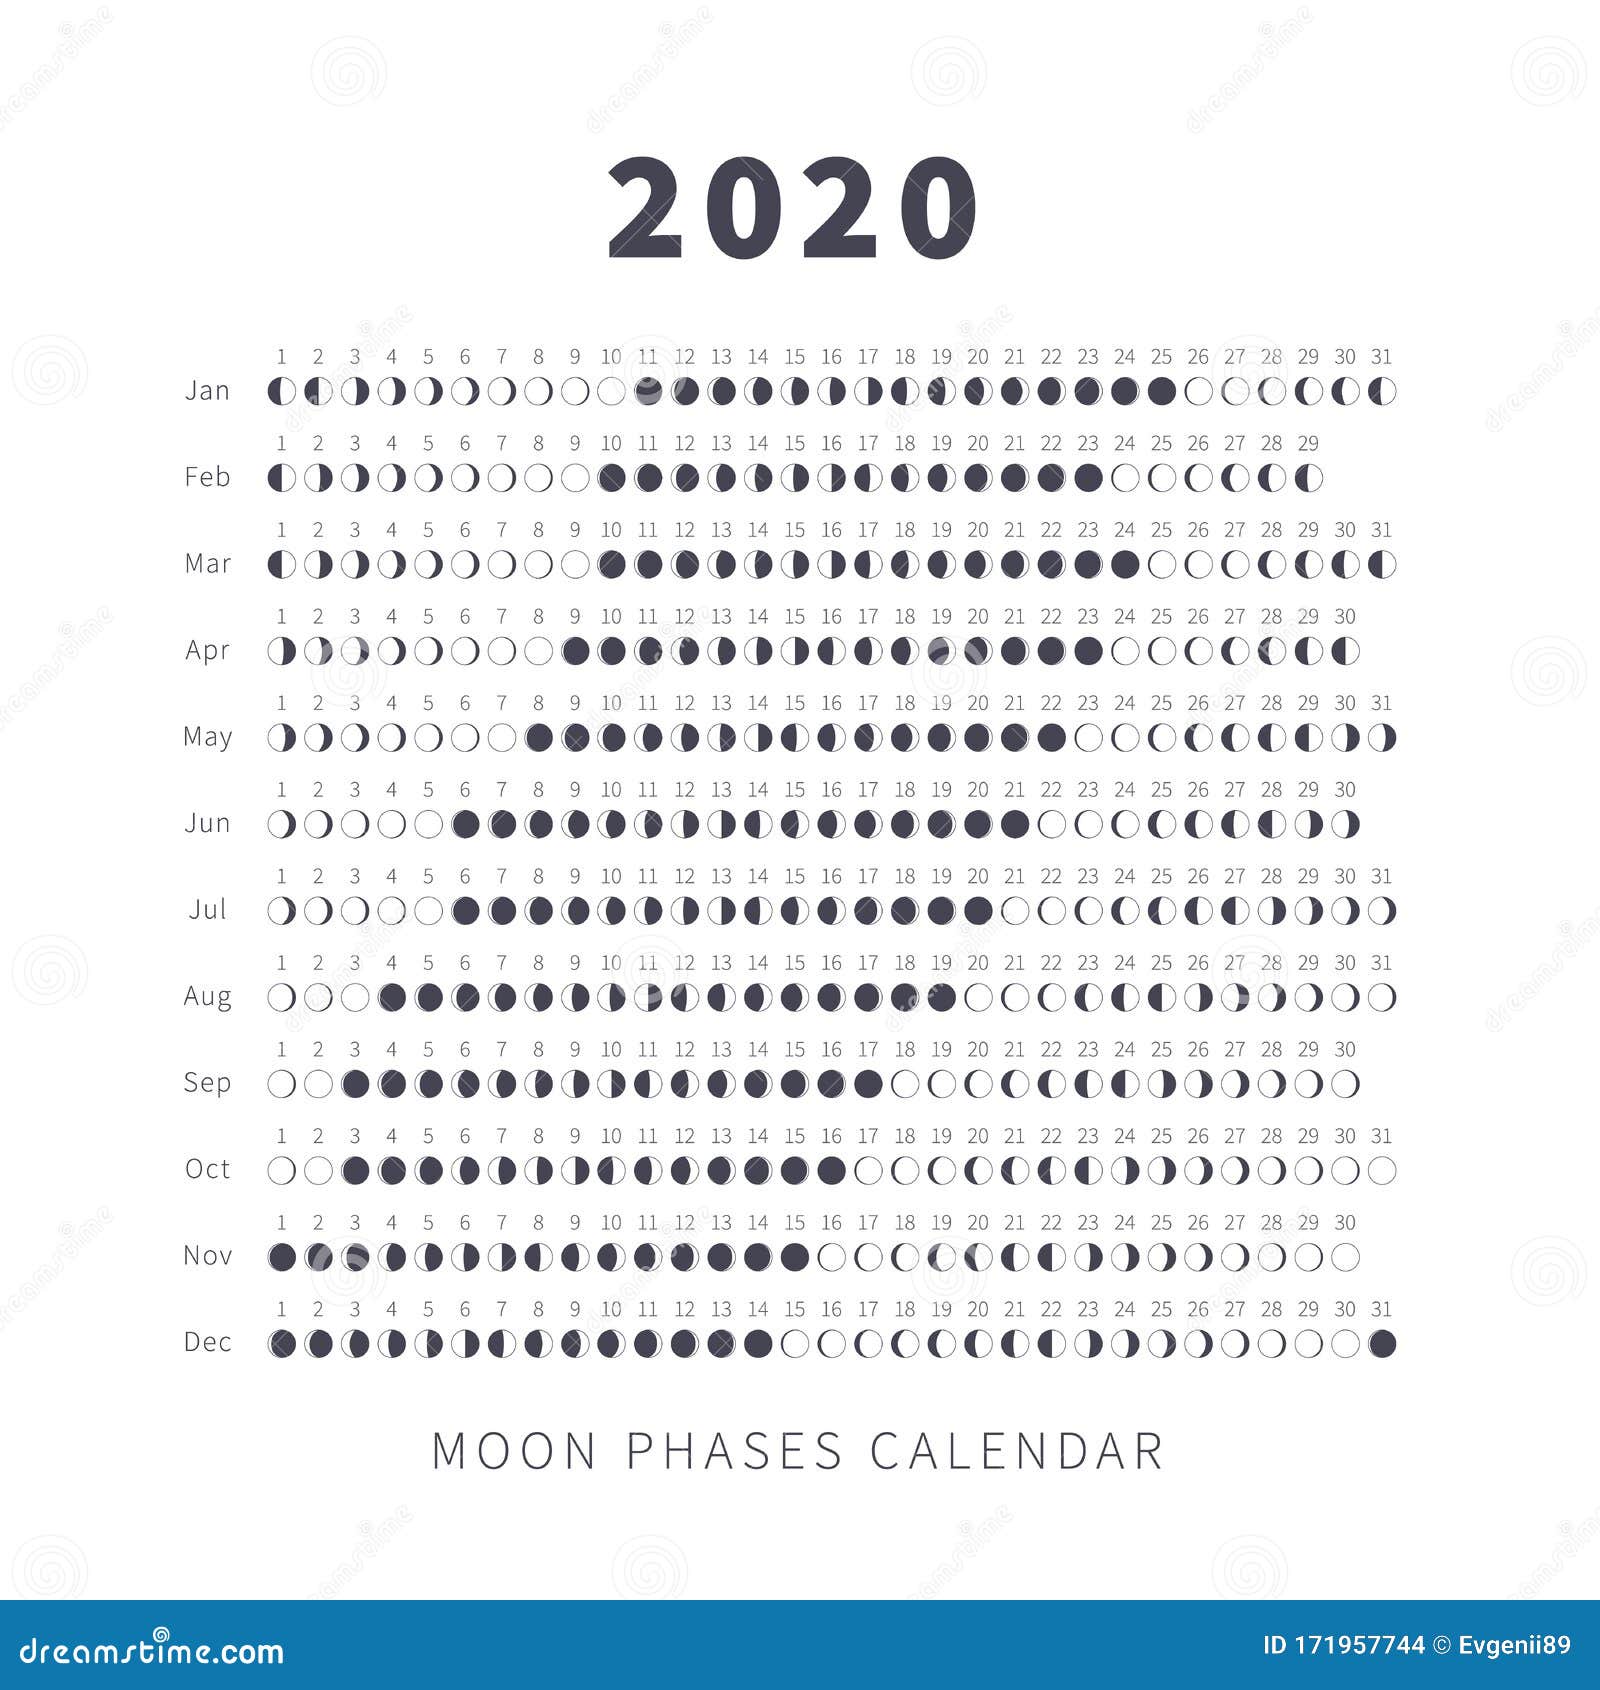 Moon calendar